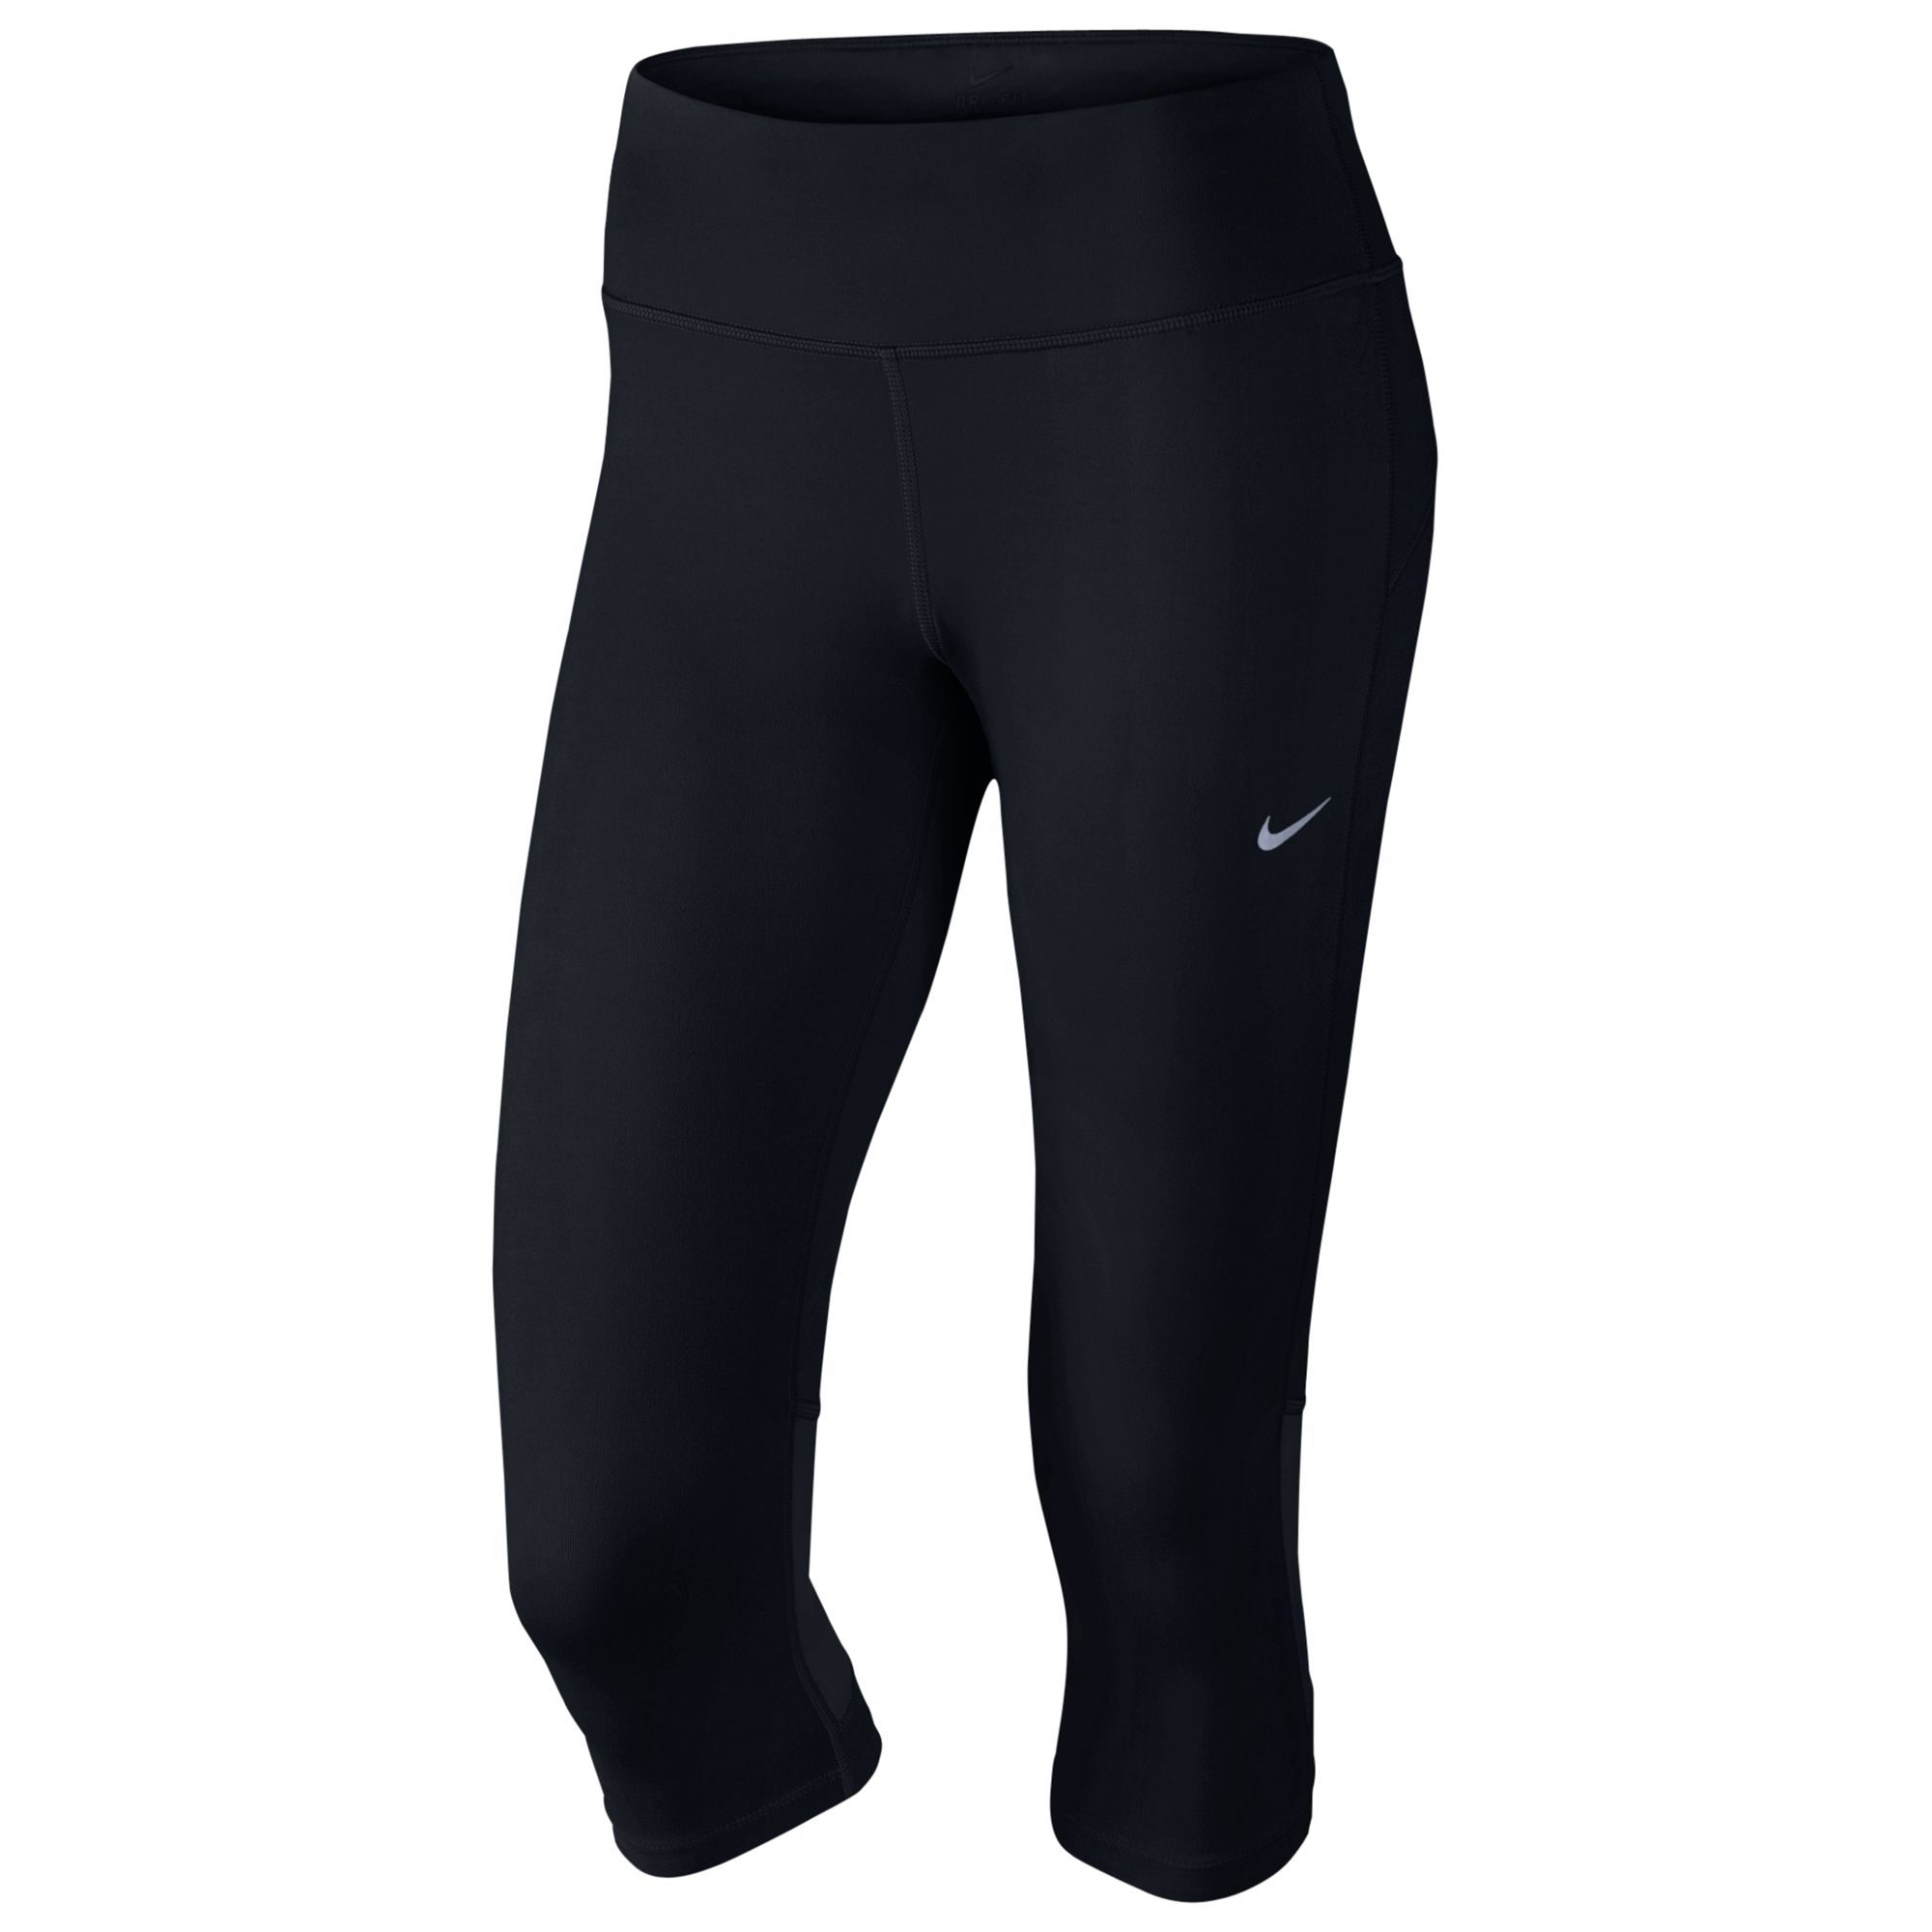 Nike Dri-FIT Epic Run 3/4 Length Capris, Black, M